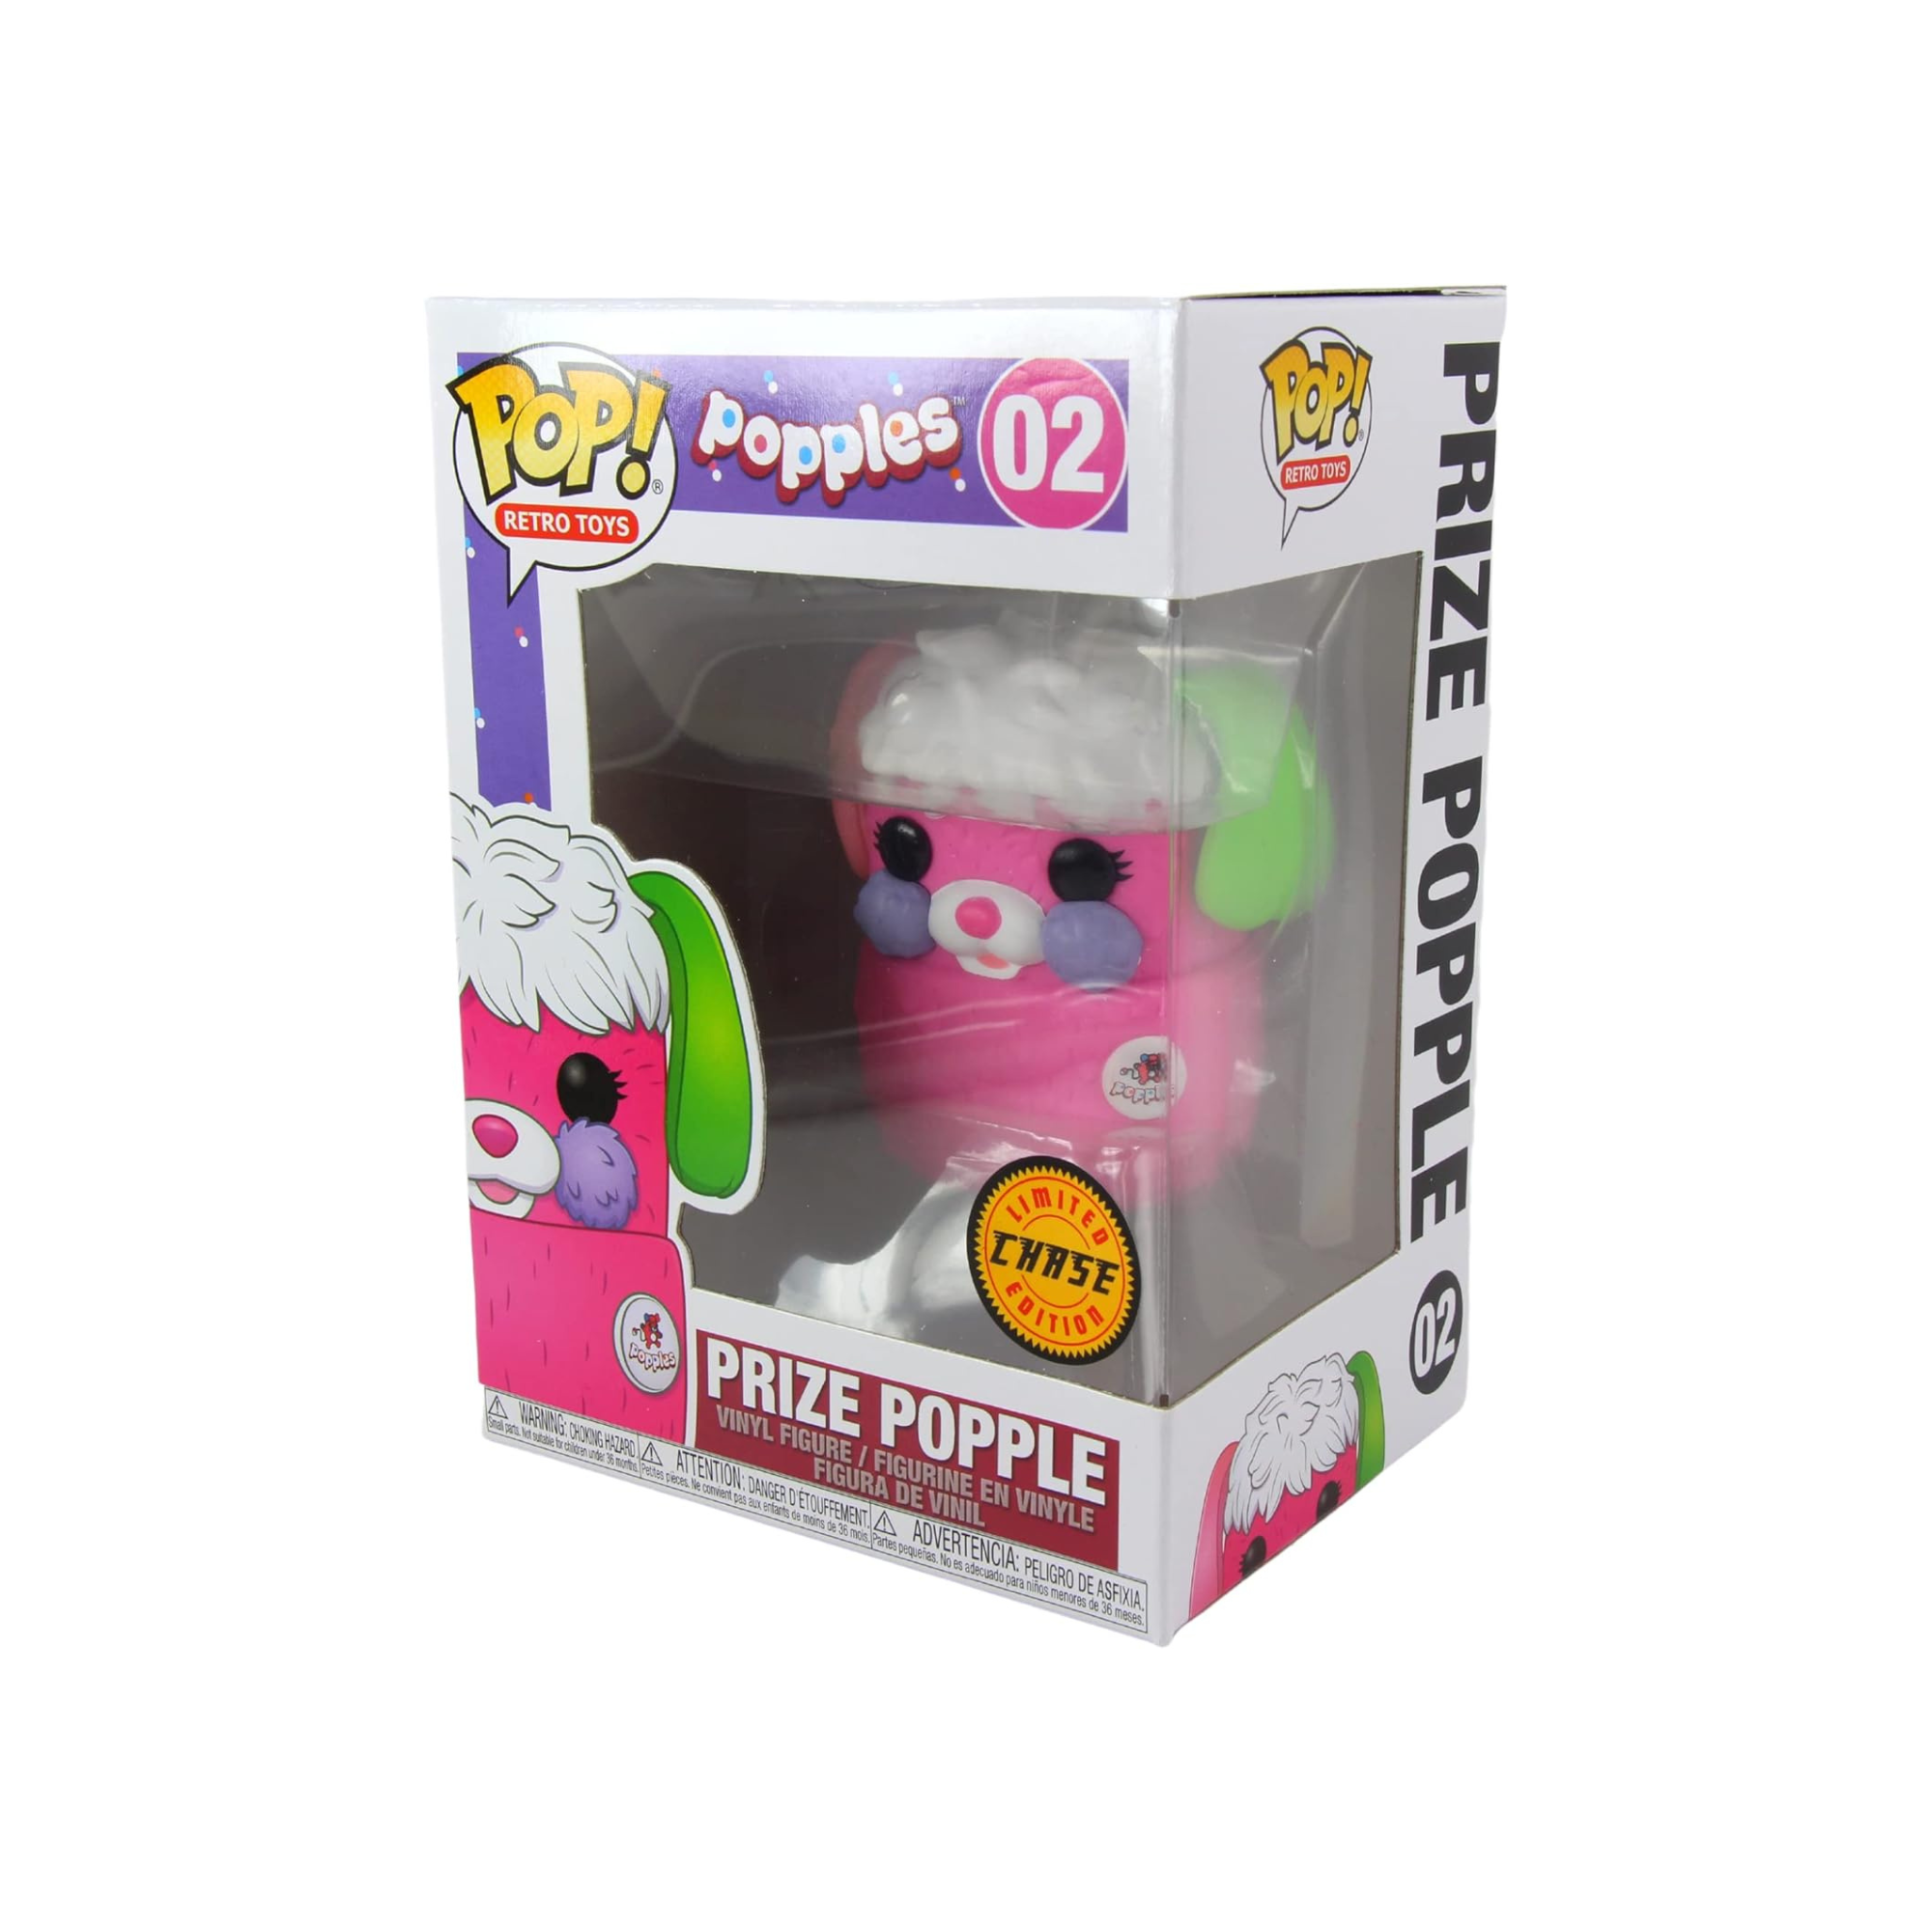 Funko POP! Retro Toys: Popples Prize Popple #02 Vinyl Figure - Toptoys2u